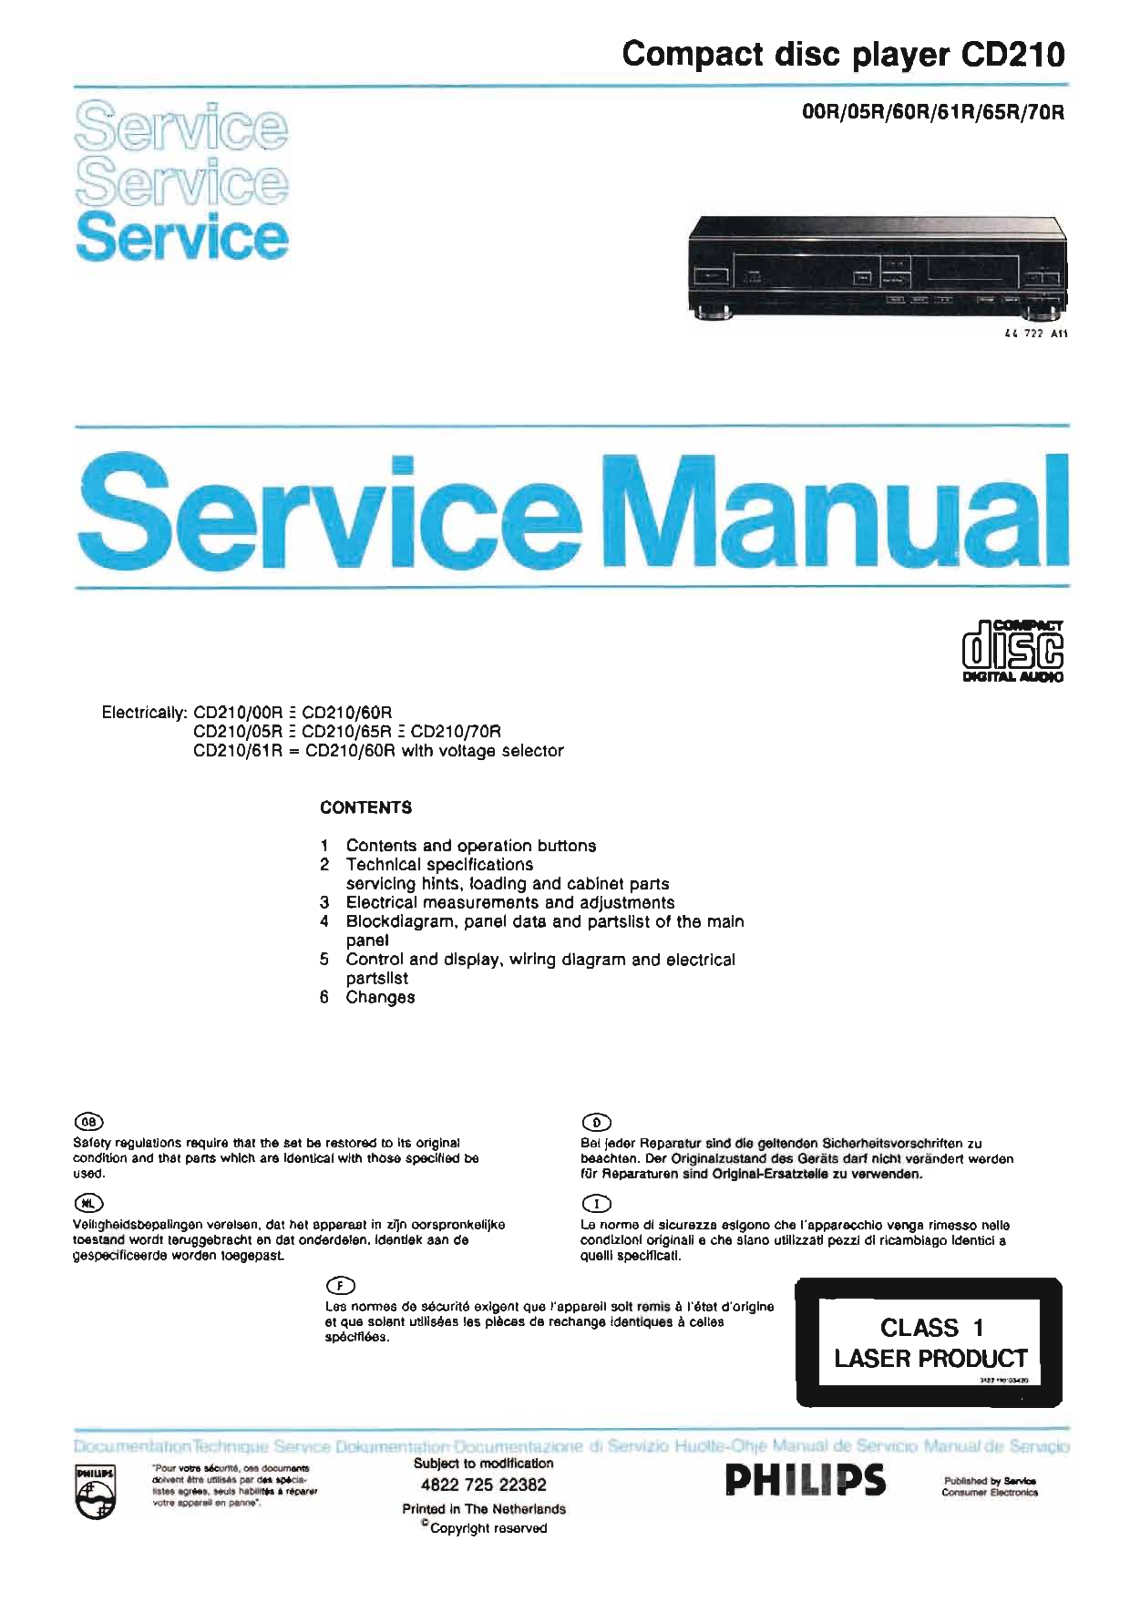 Philips CD-210 Service Manual